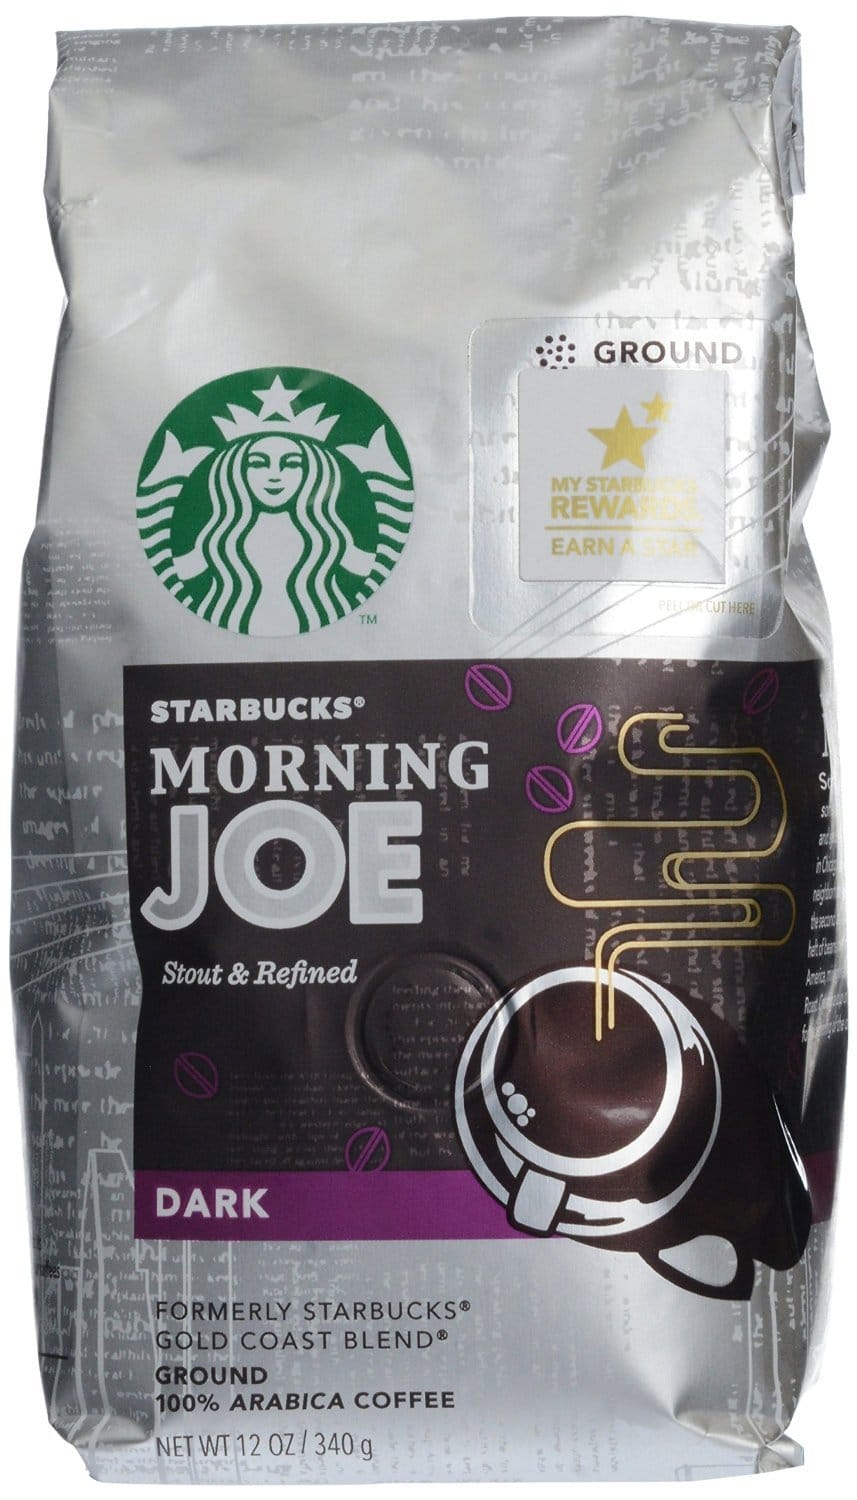 Starbucks Morning Joe